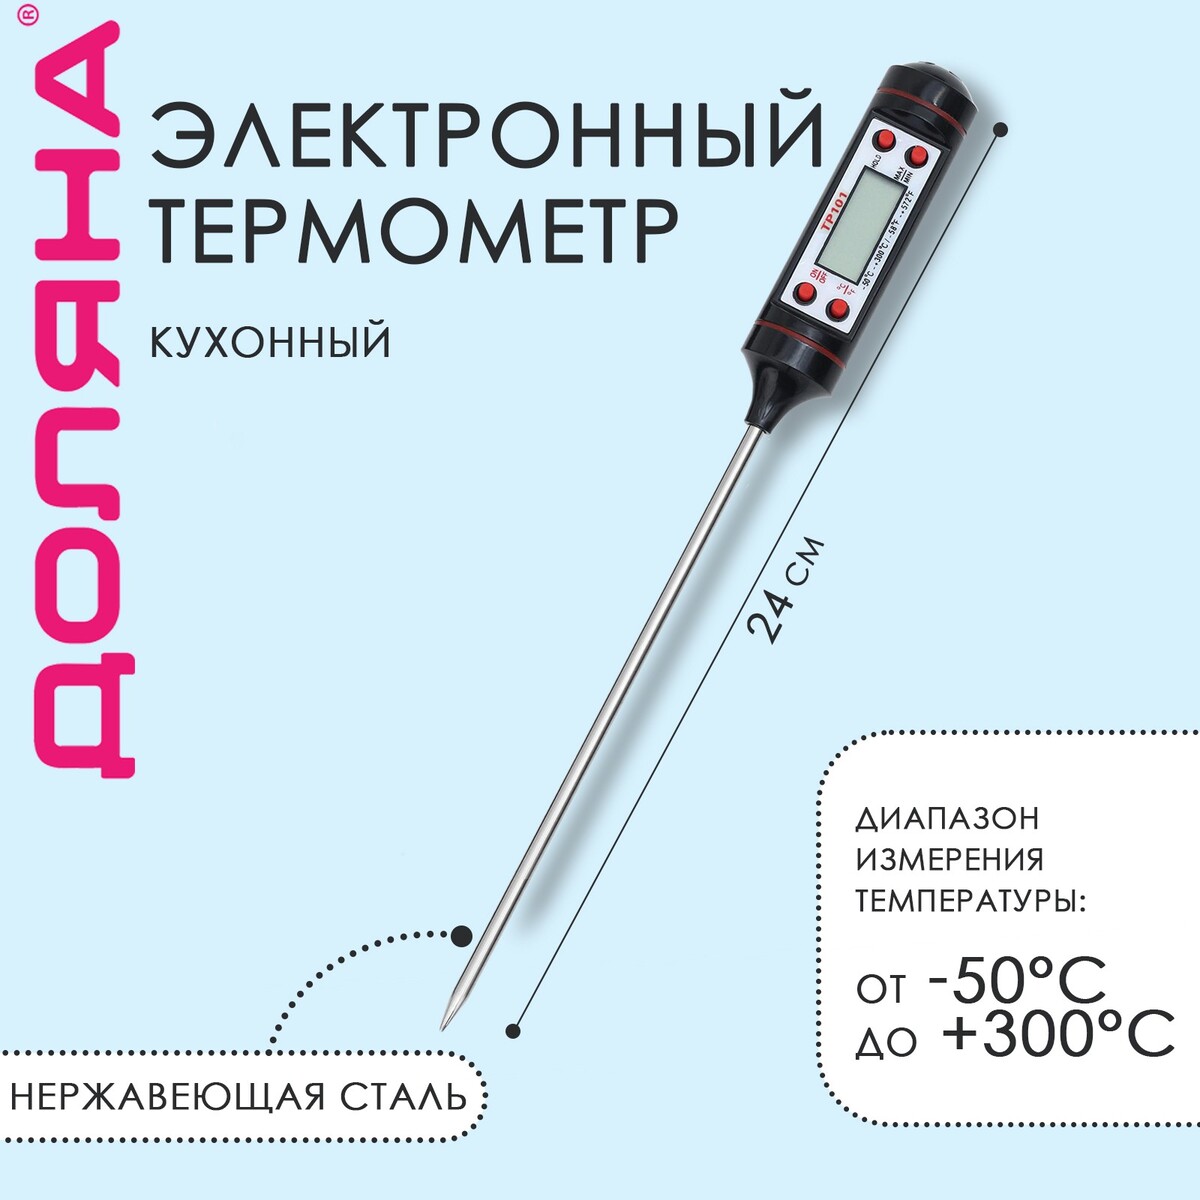 Термометр (термощуп) для пищи электронный на батарейках доляна, в коробке термощуп кухонный ltp 001 максимальная температура 200 °c от батареек lr44